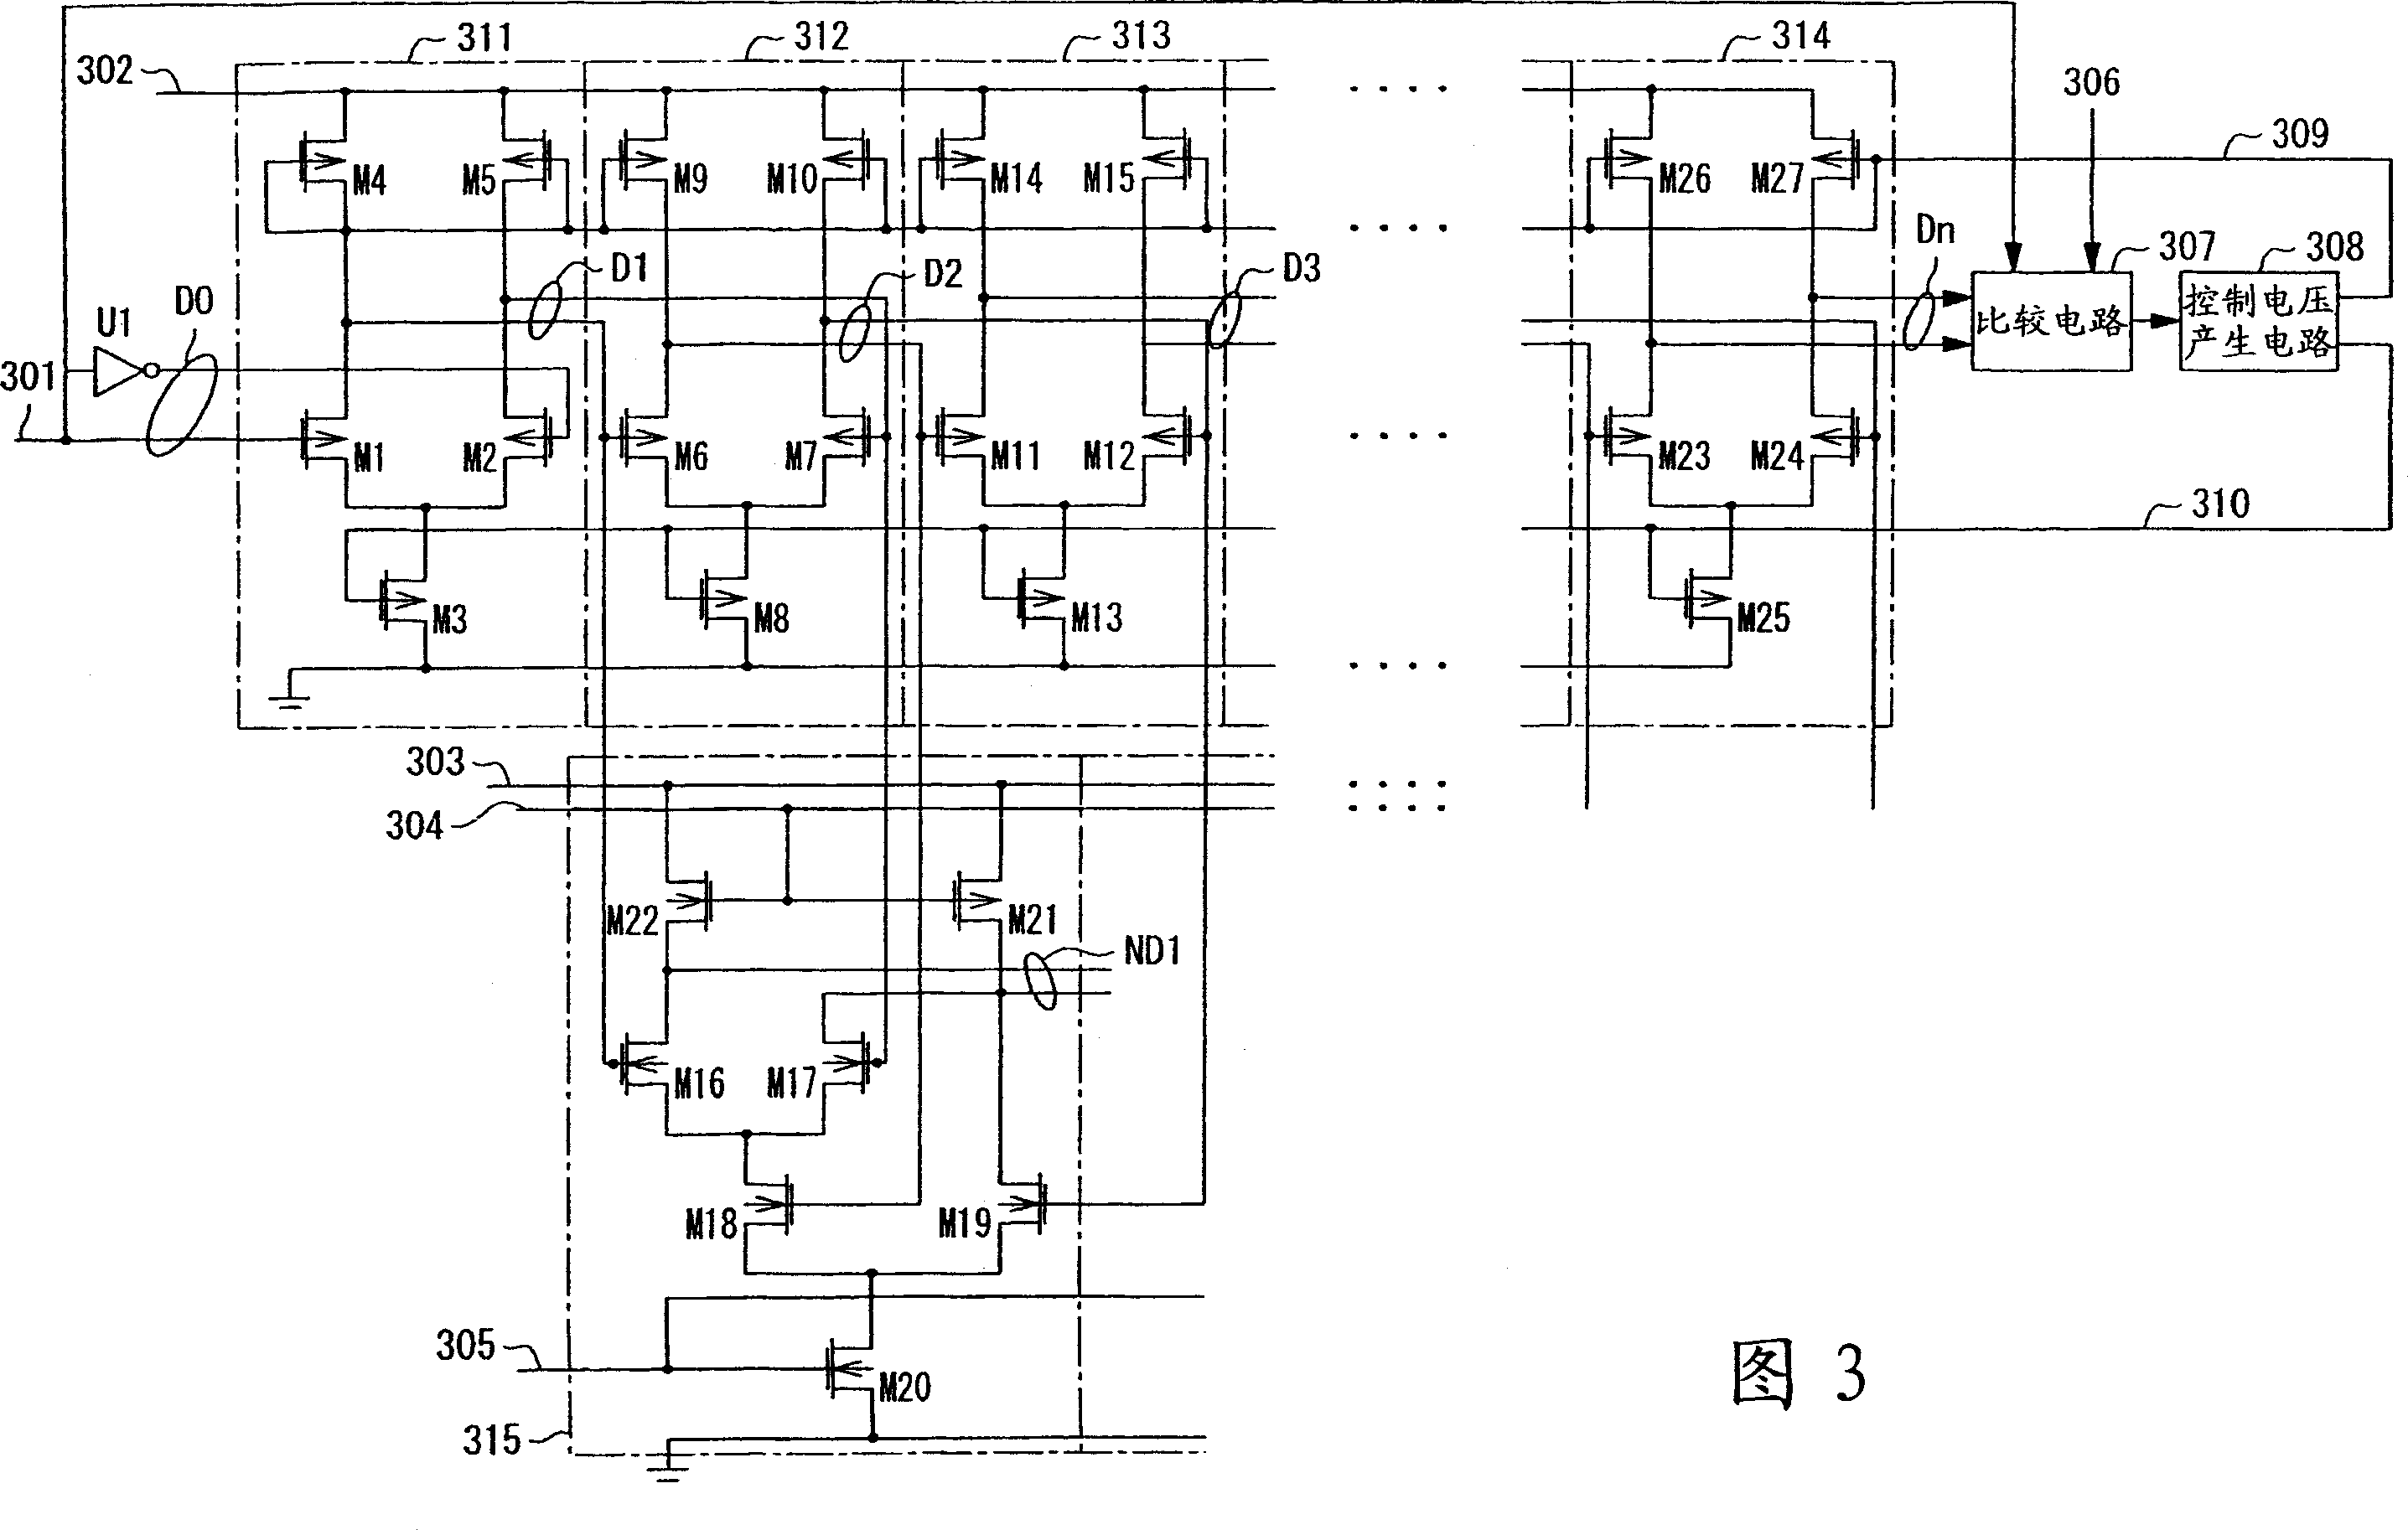 Pulse generating circuit, electronic device using this pulse generating circuit, and information transmitting method using this circuit